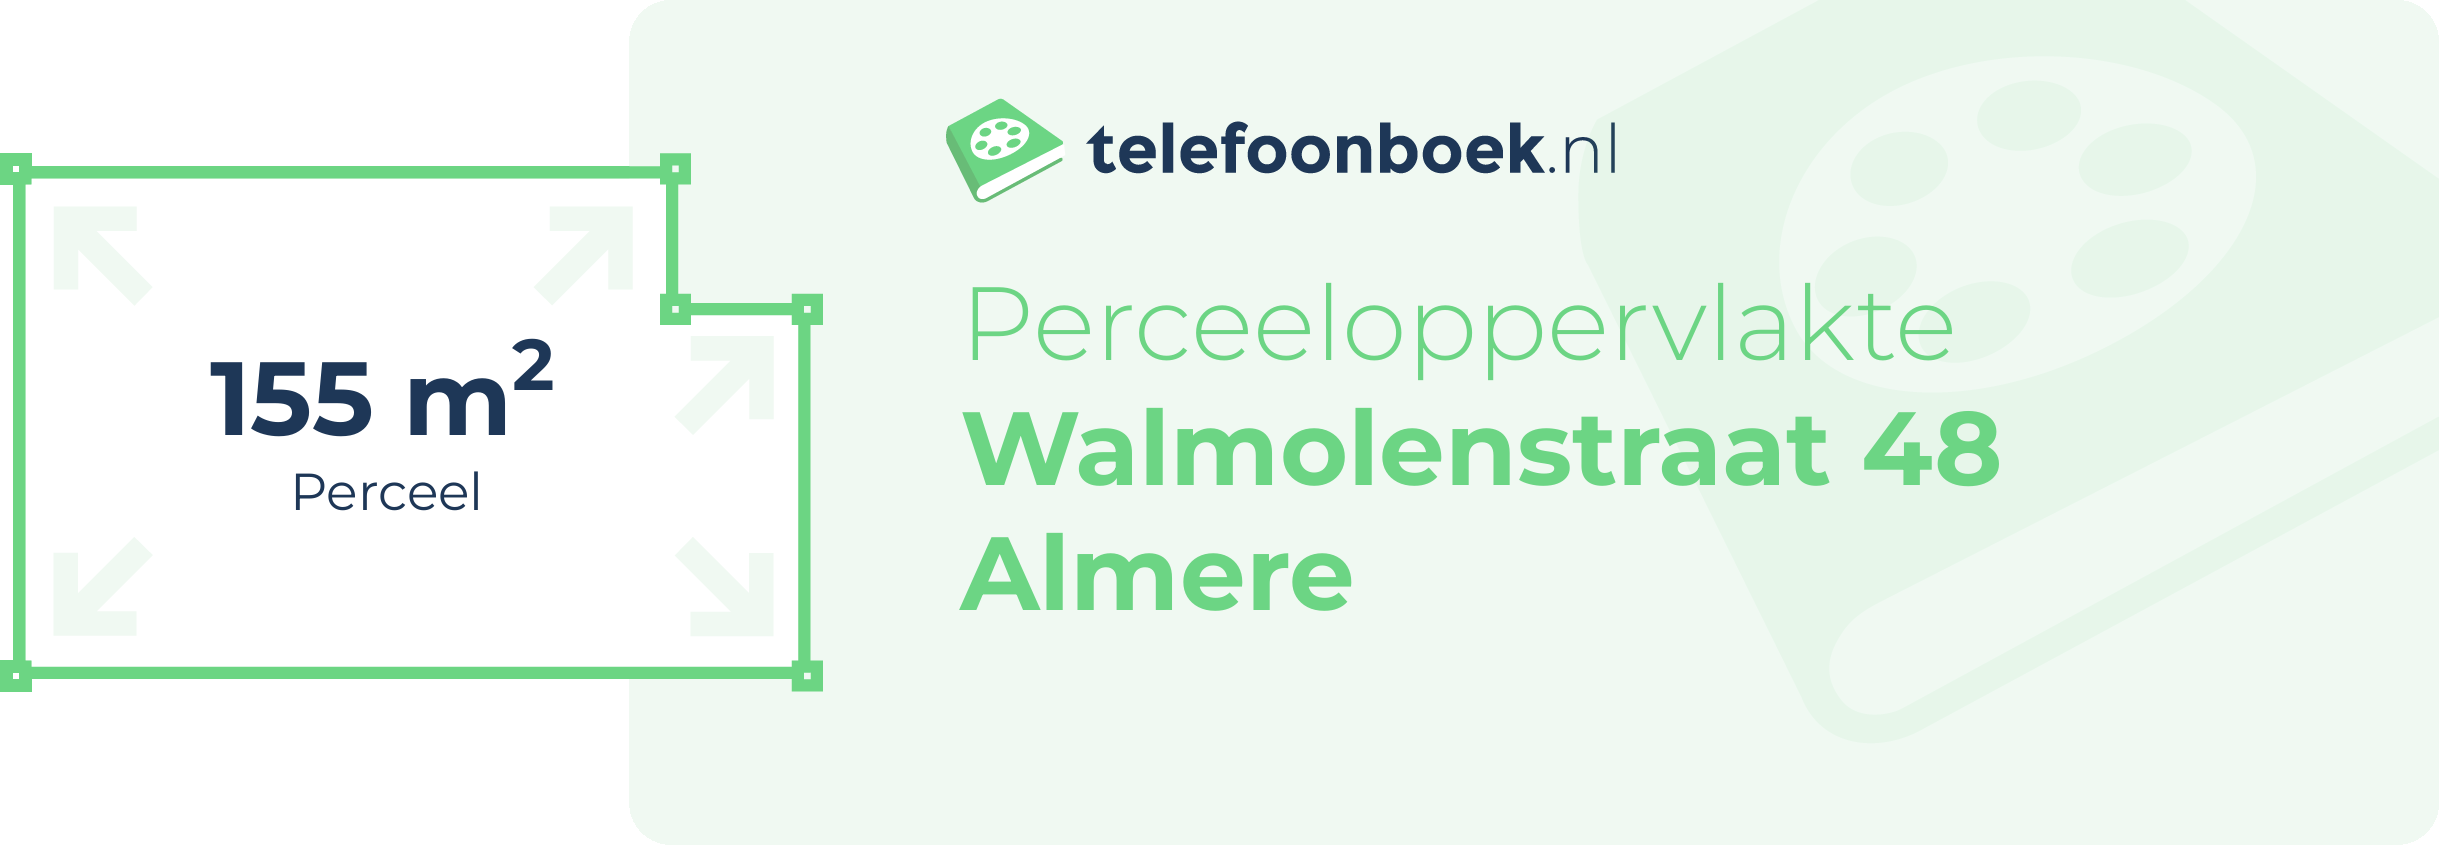 Perceeloppervlakte Walmolenstraat 48 Almere